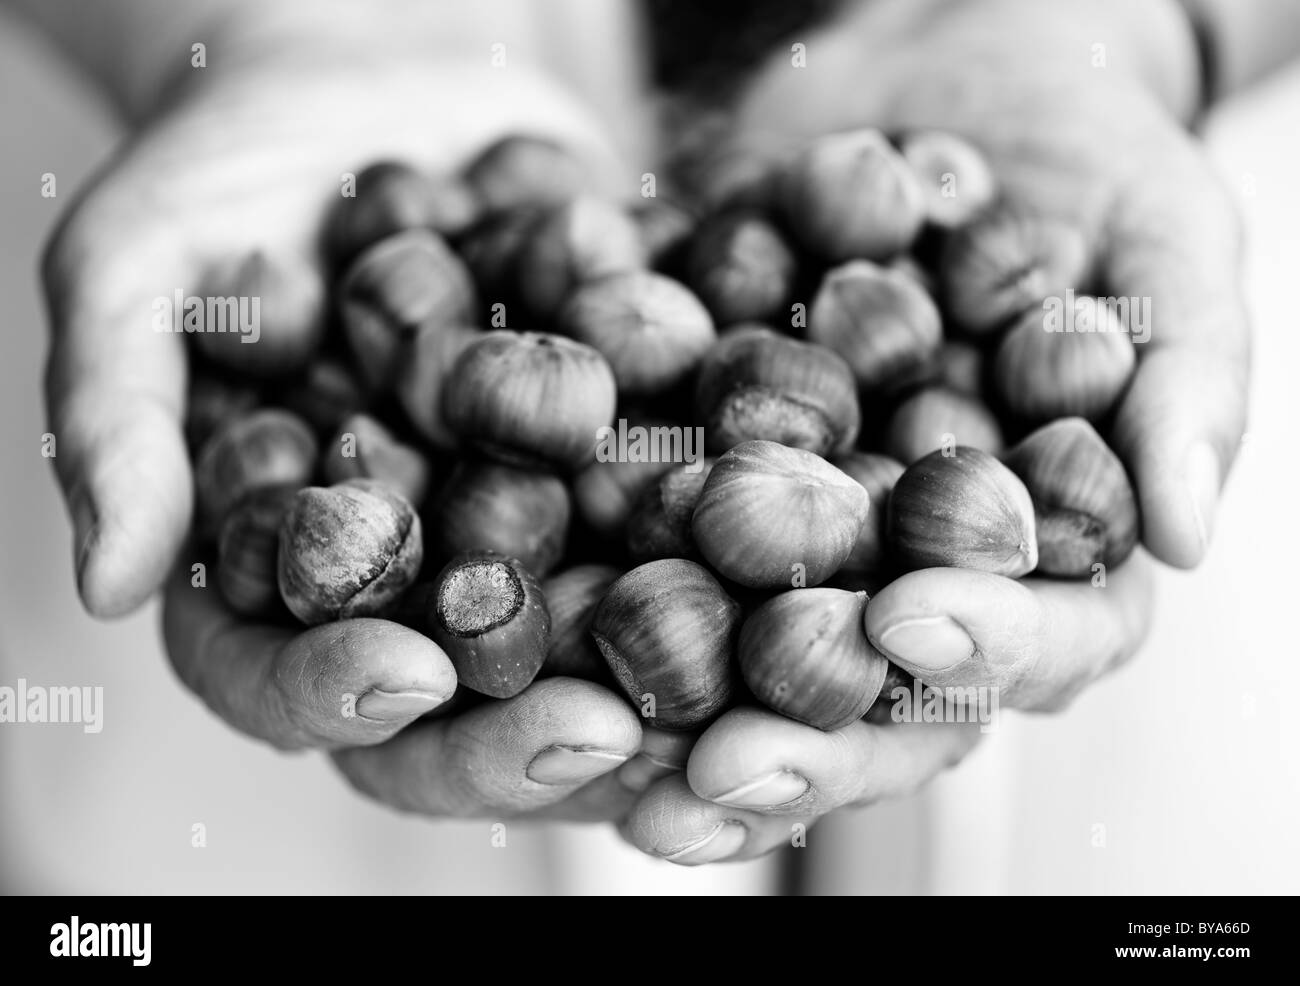 Hazelnuts handful in elderly village woman hands. Black and white monochrome. Stock Photo